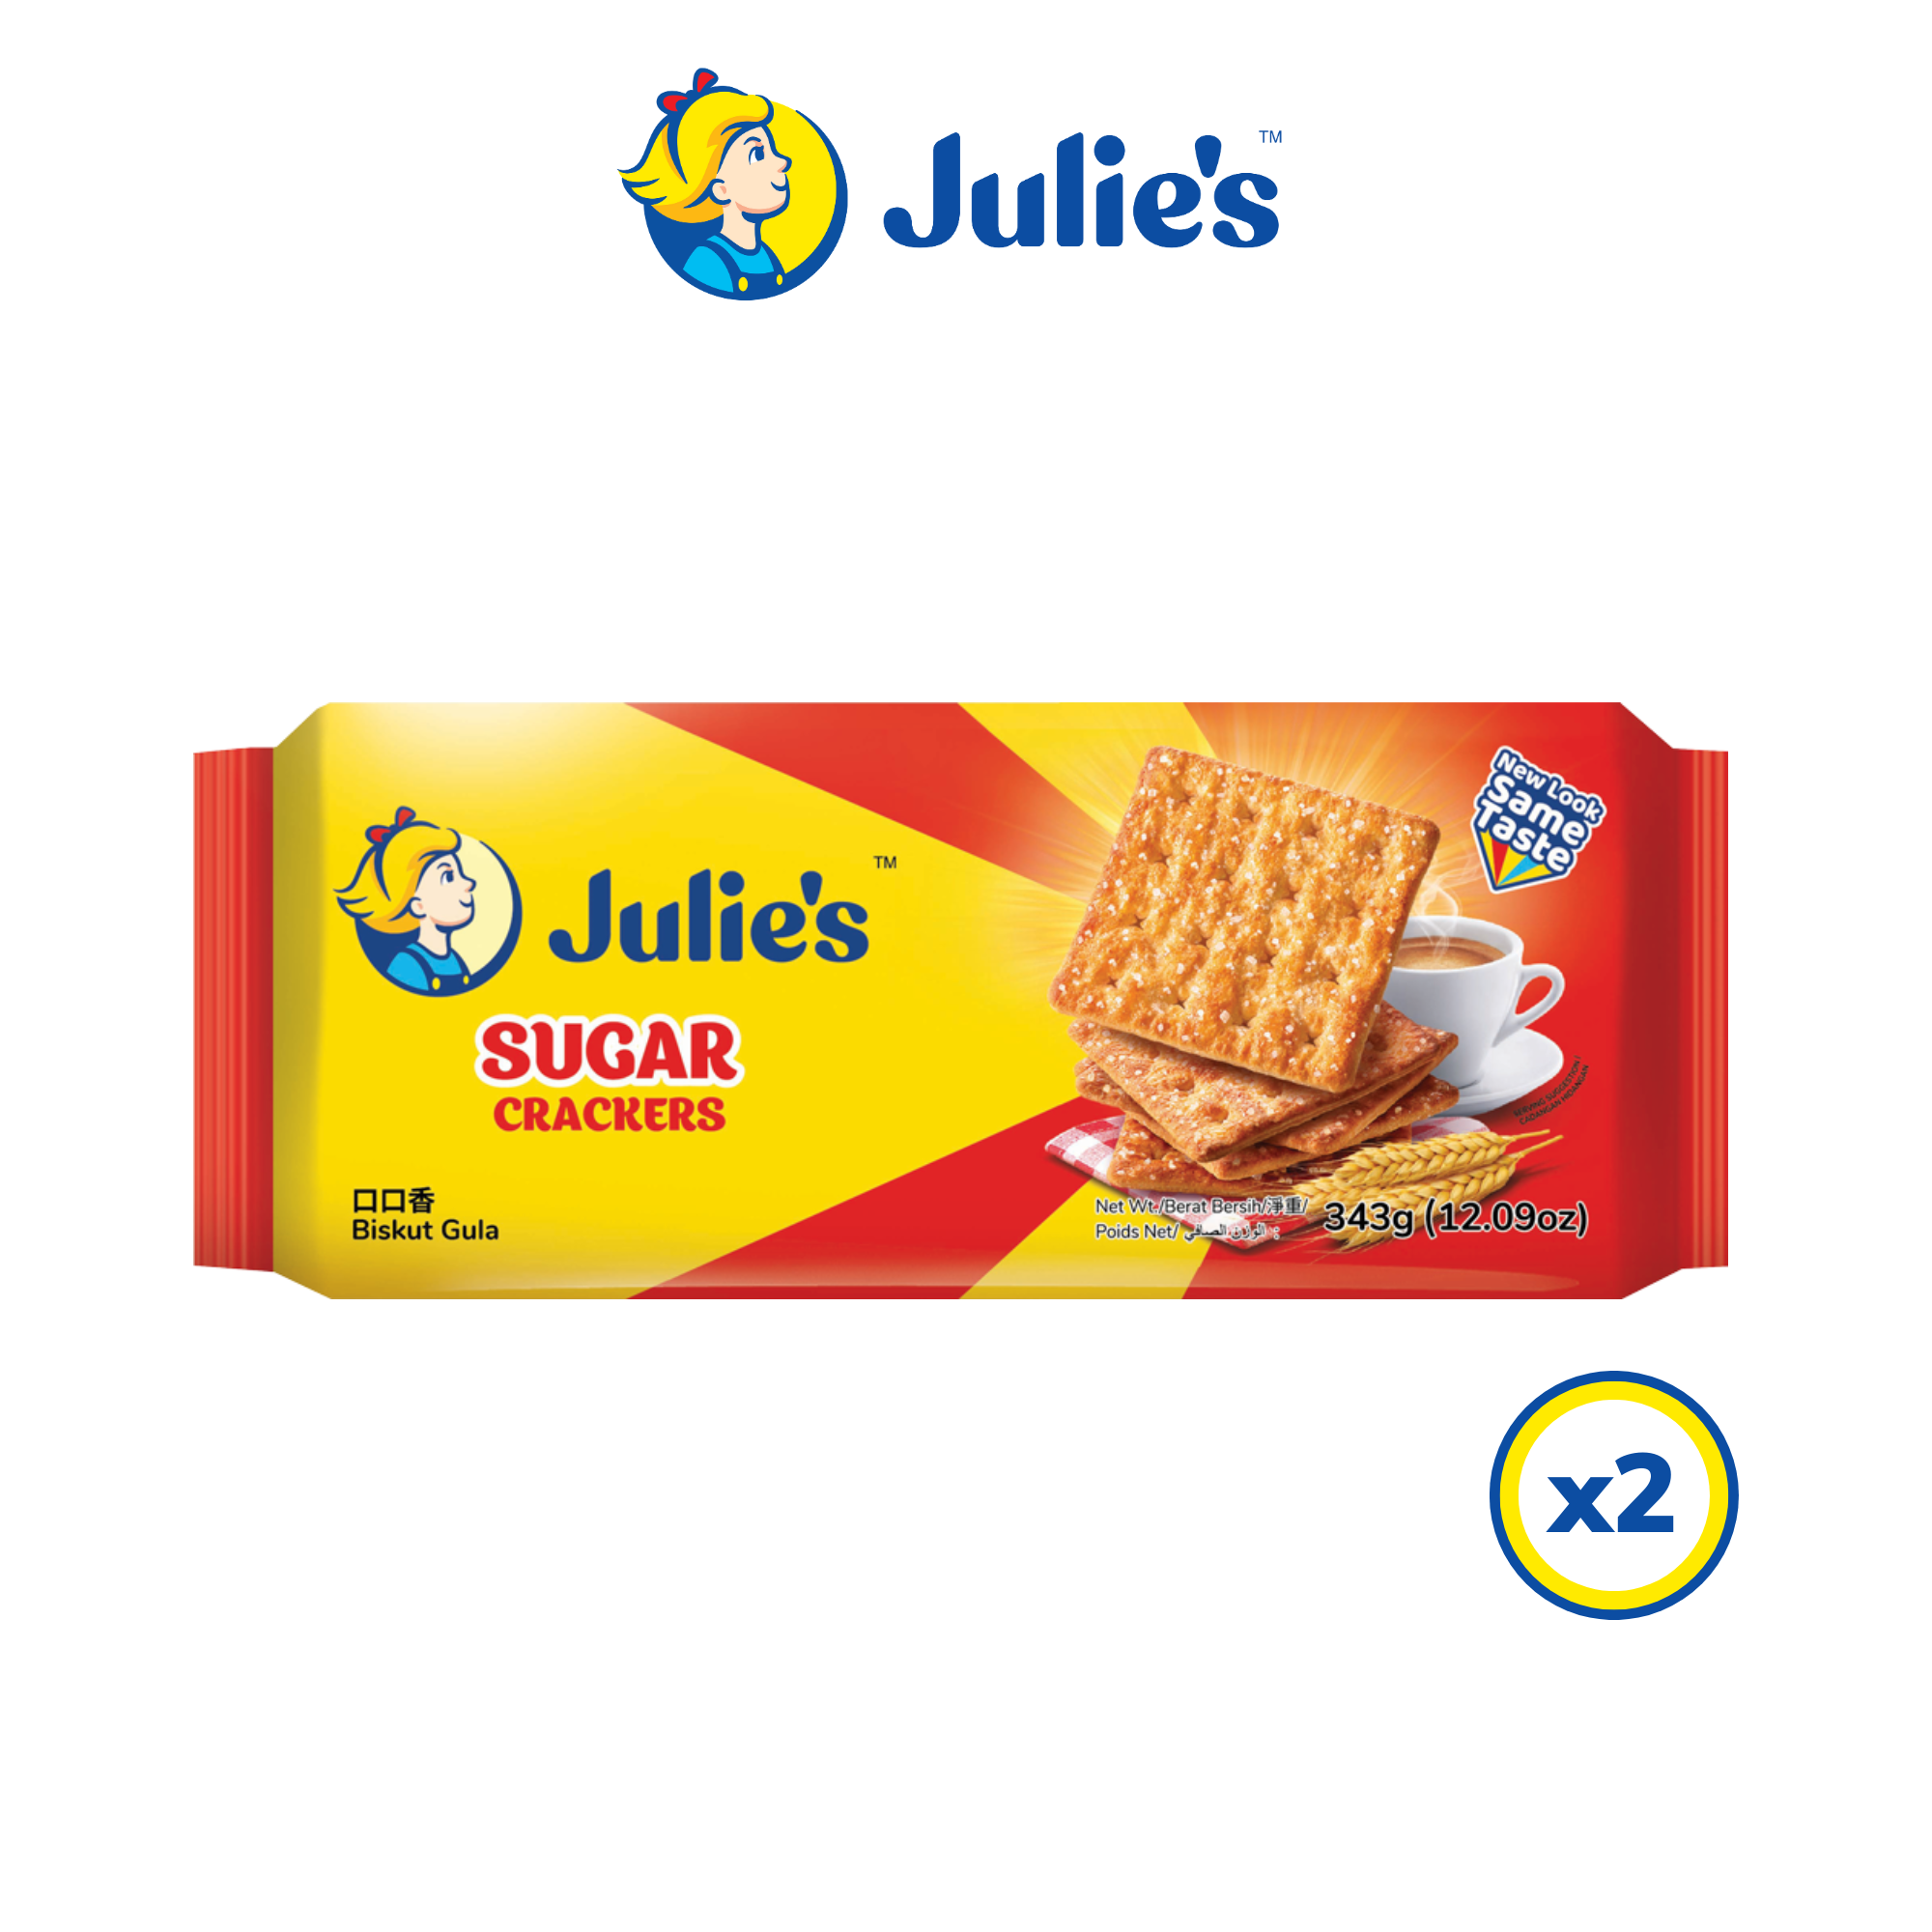 Julie's Sugar Crackers 343g x 2 packs